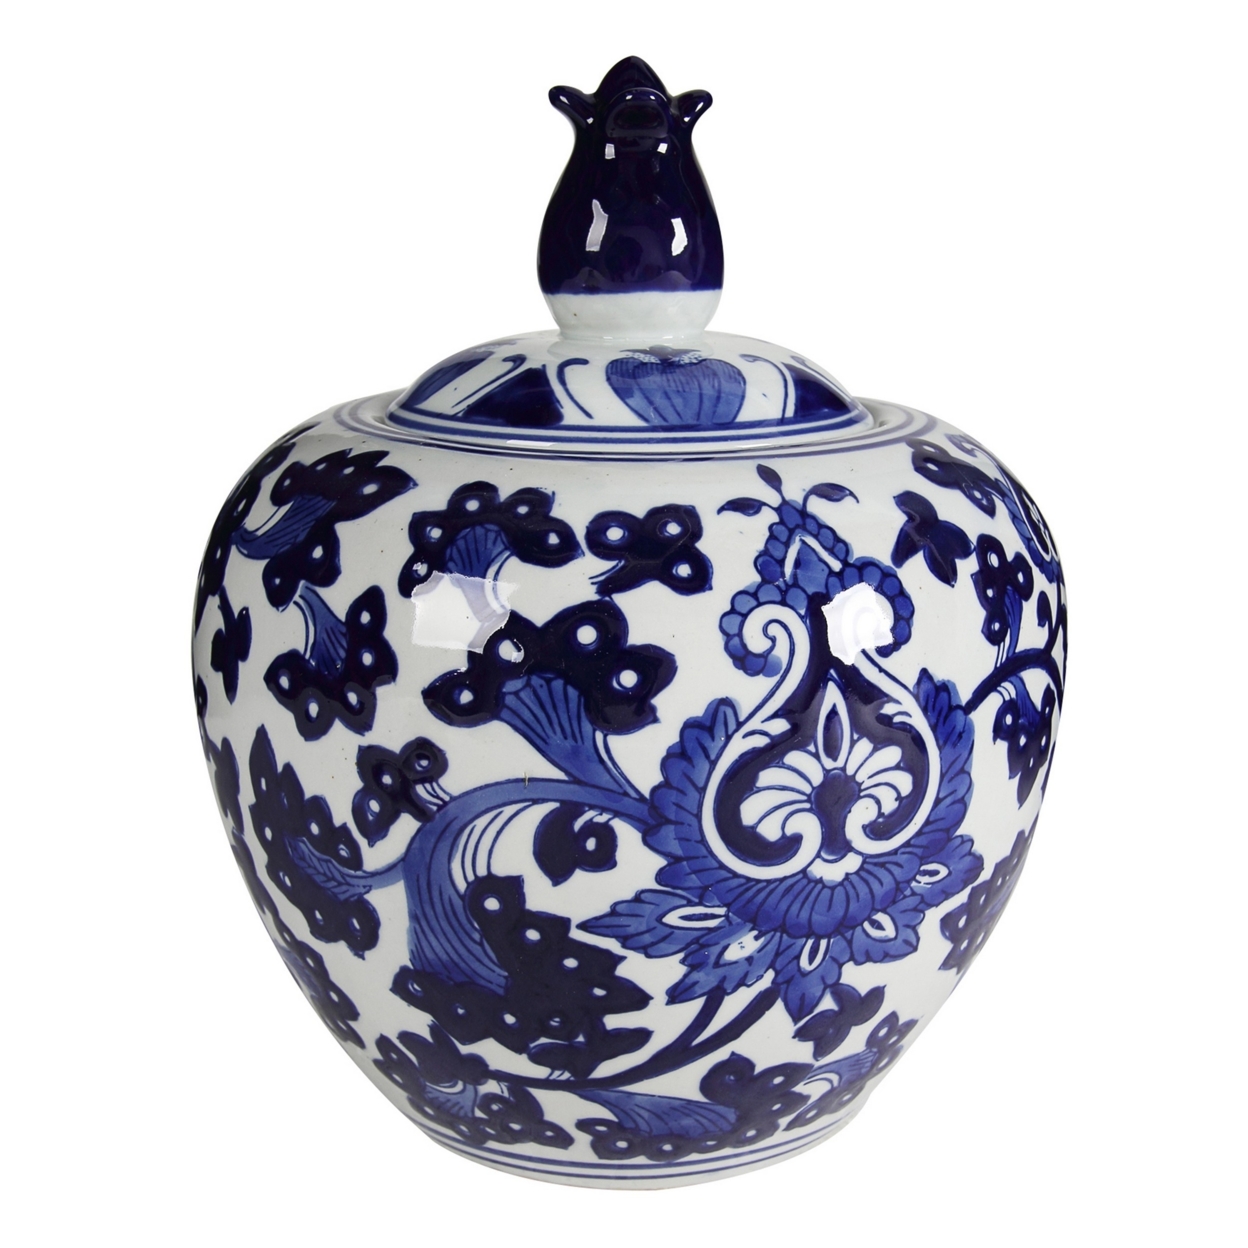 10 Inch Lidded Jar, Round Persian Floral Print, Blue And White Porcelain- Saltoro Sherpi